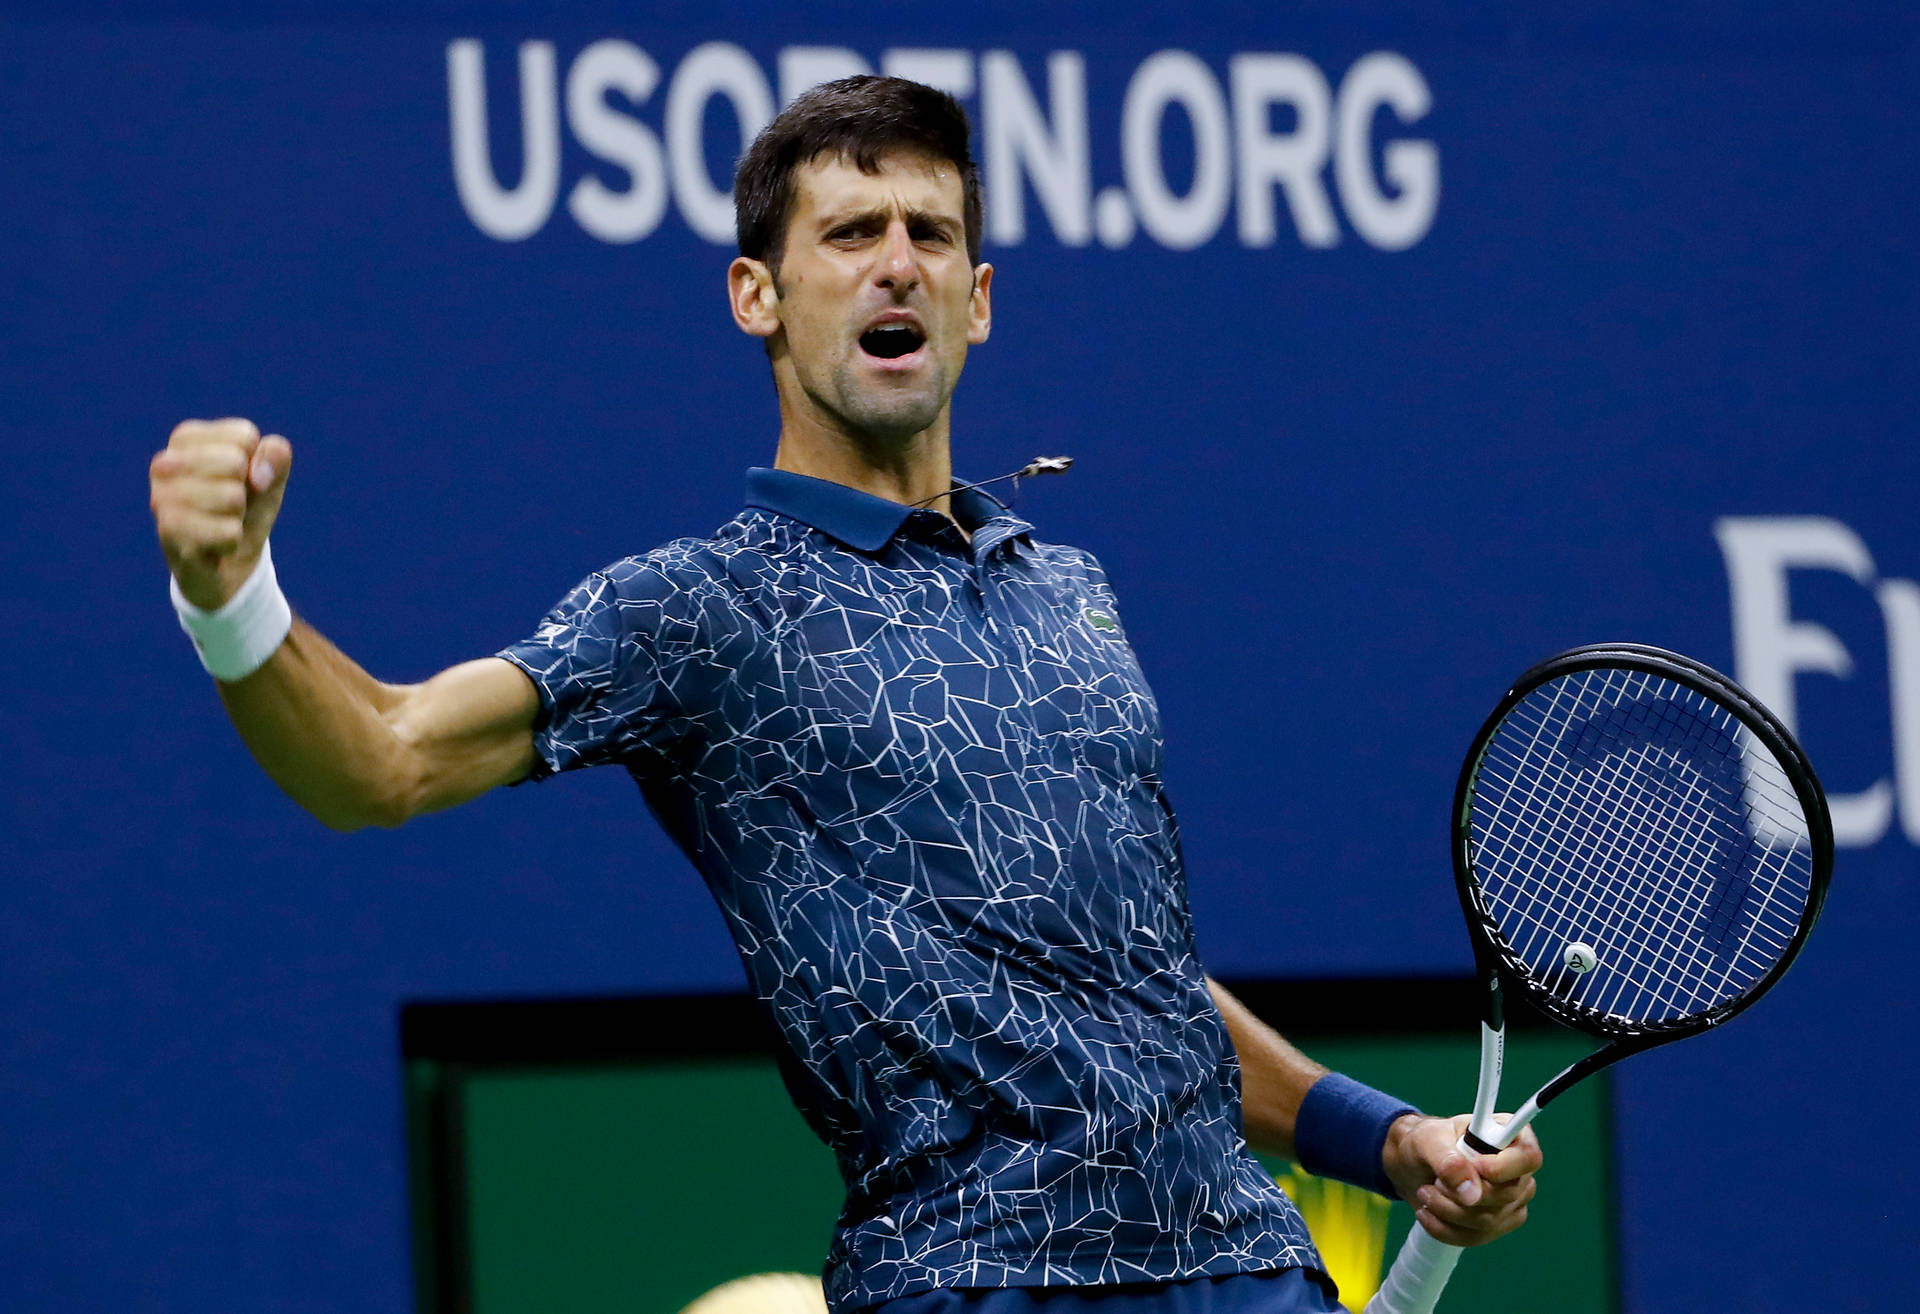 Novak Djokovic 2018 US Open wallpaper.